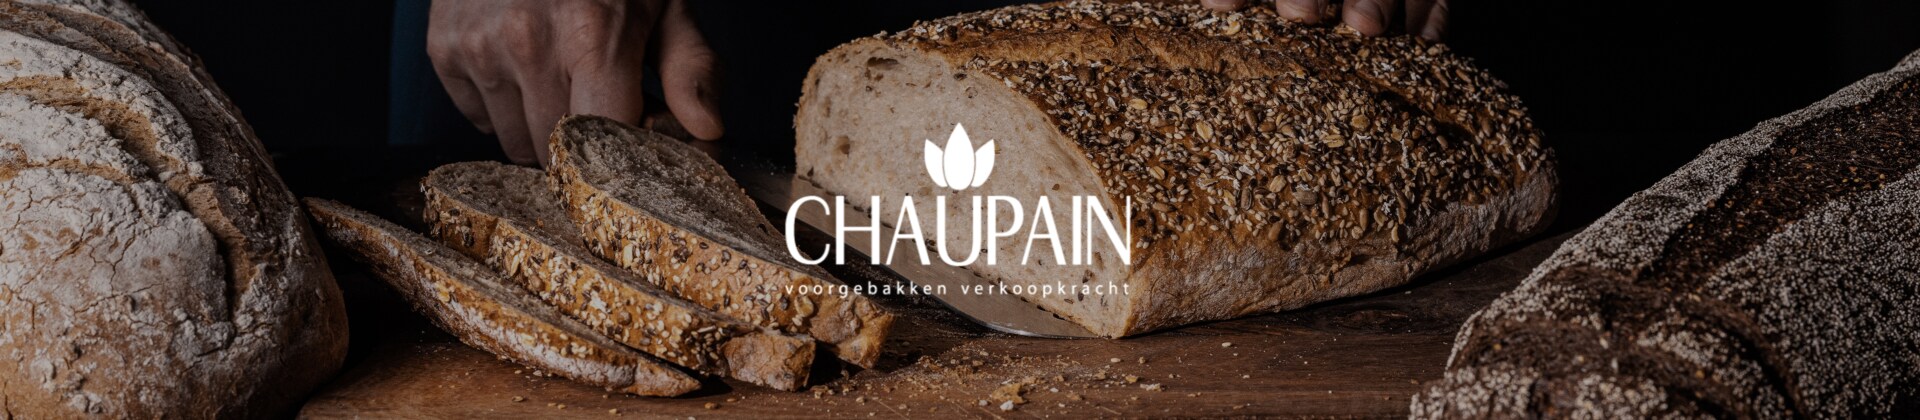 Chaupain brood